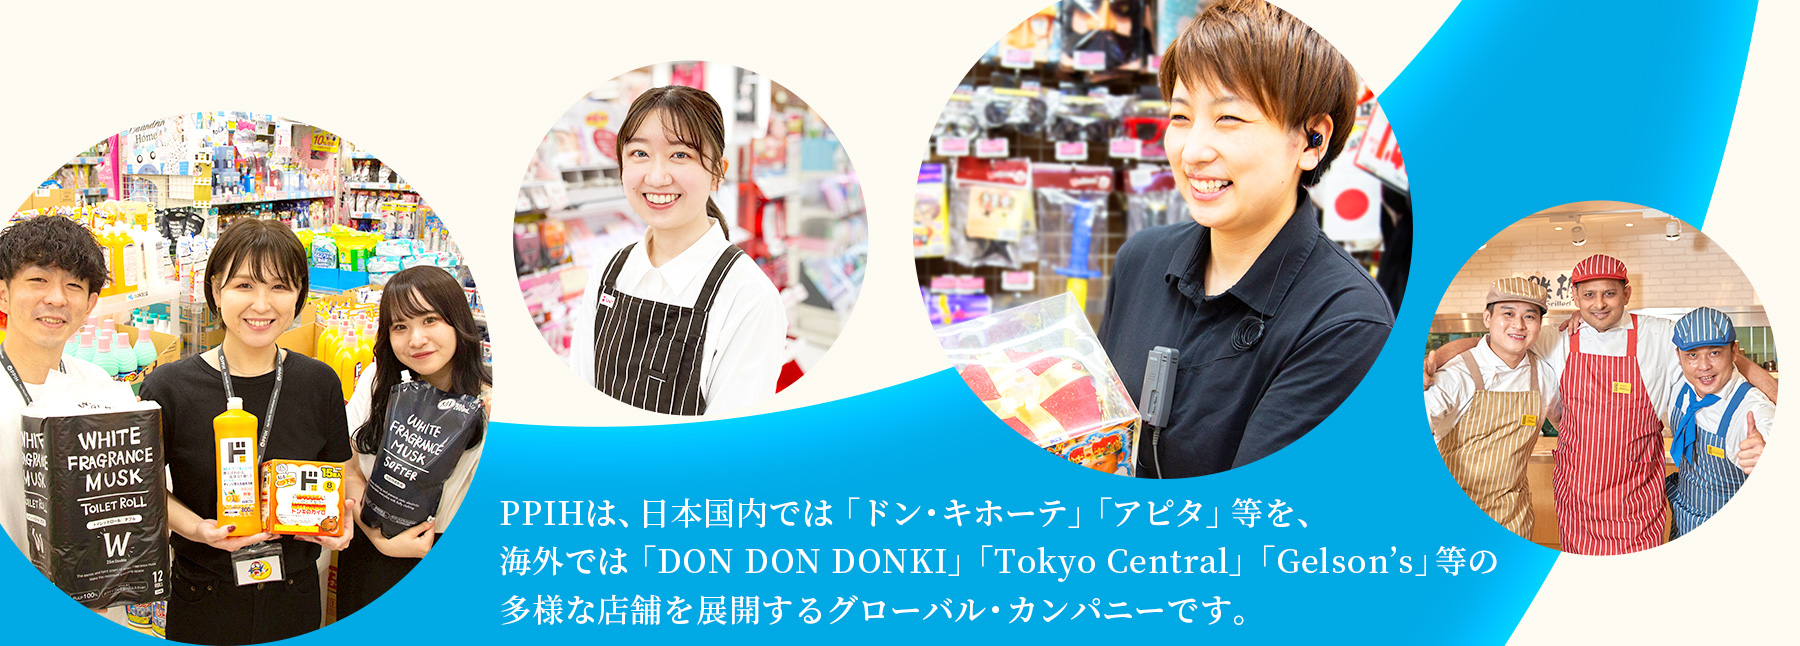 PPIHは、日本国内では「ドン・キホーテ」「アピタ」等を、海外では「DON DON DONKI」「Tokyo Central」「Gelson’s」等の多様な店舗を展開するグローバル・カンパニーです。 